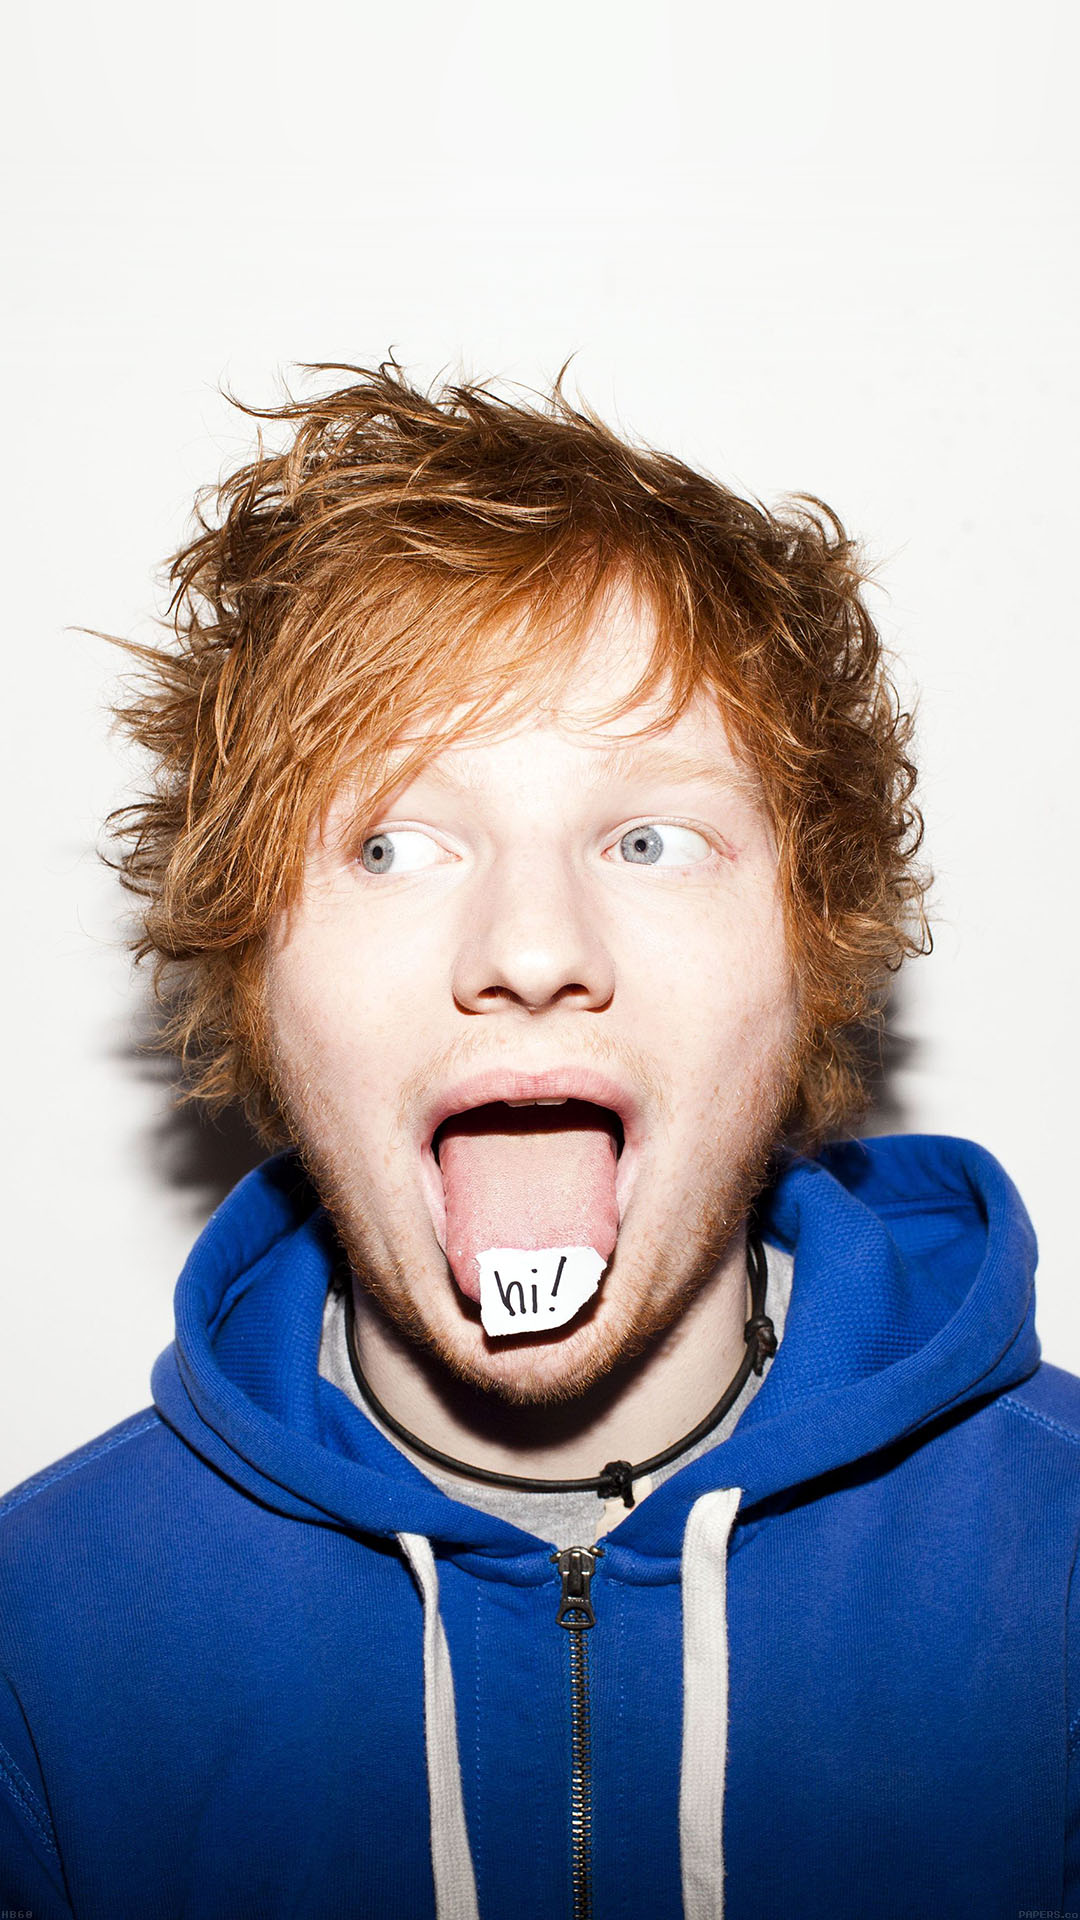 Ed Sheeran Singer Songwriter Android wallpaper